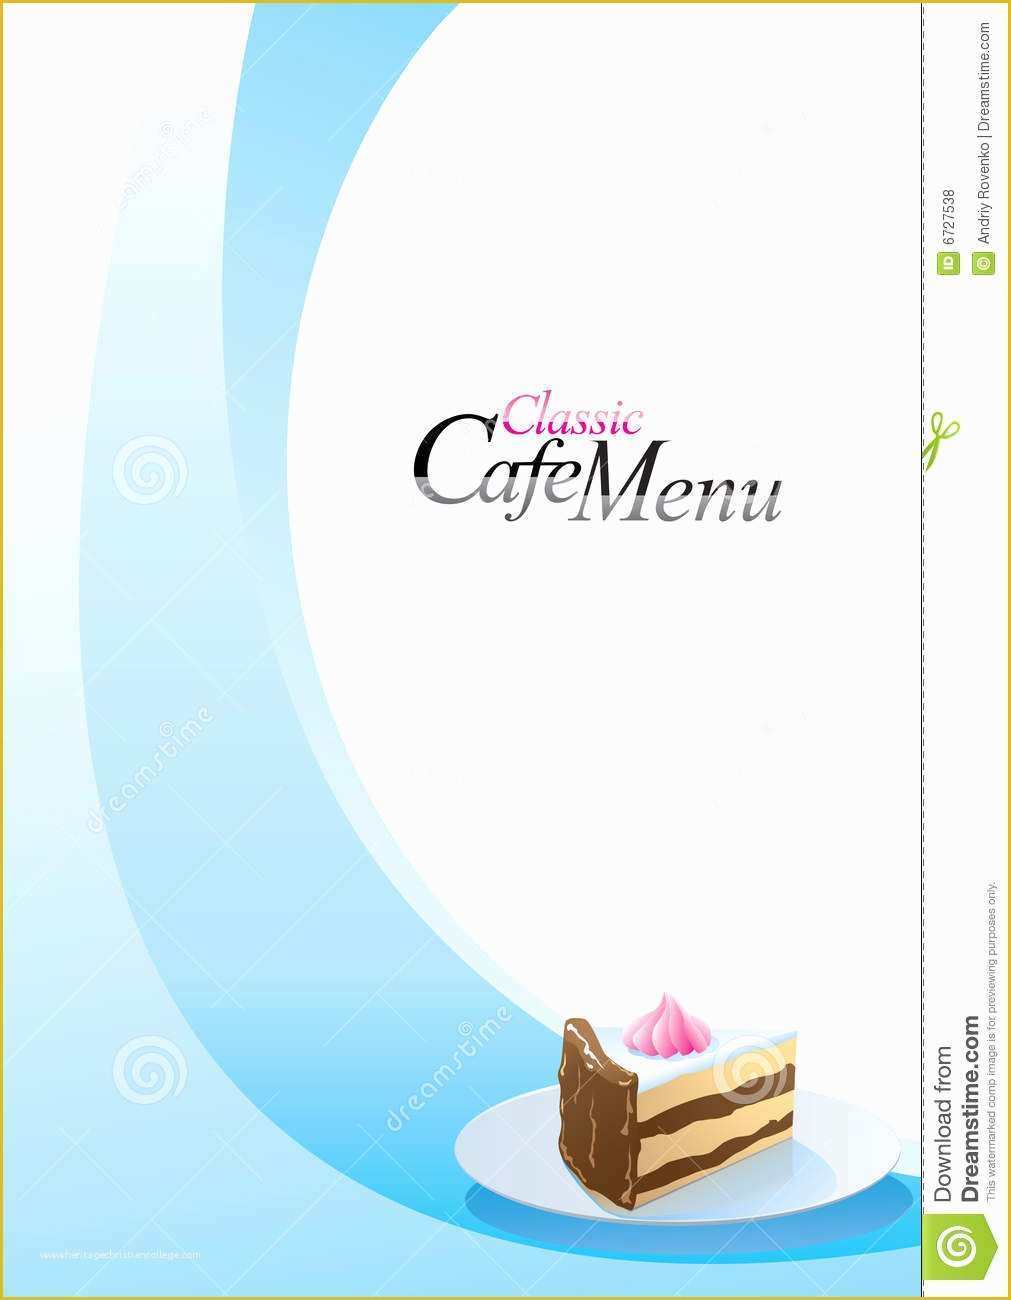 Dessert Menu Template Free Download Of Dessert Menu Template Royalty Free Stock S Image